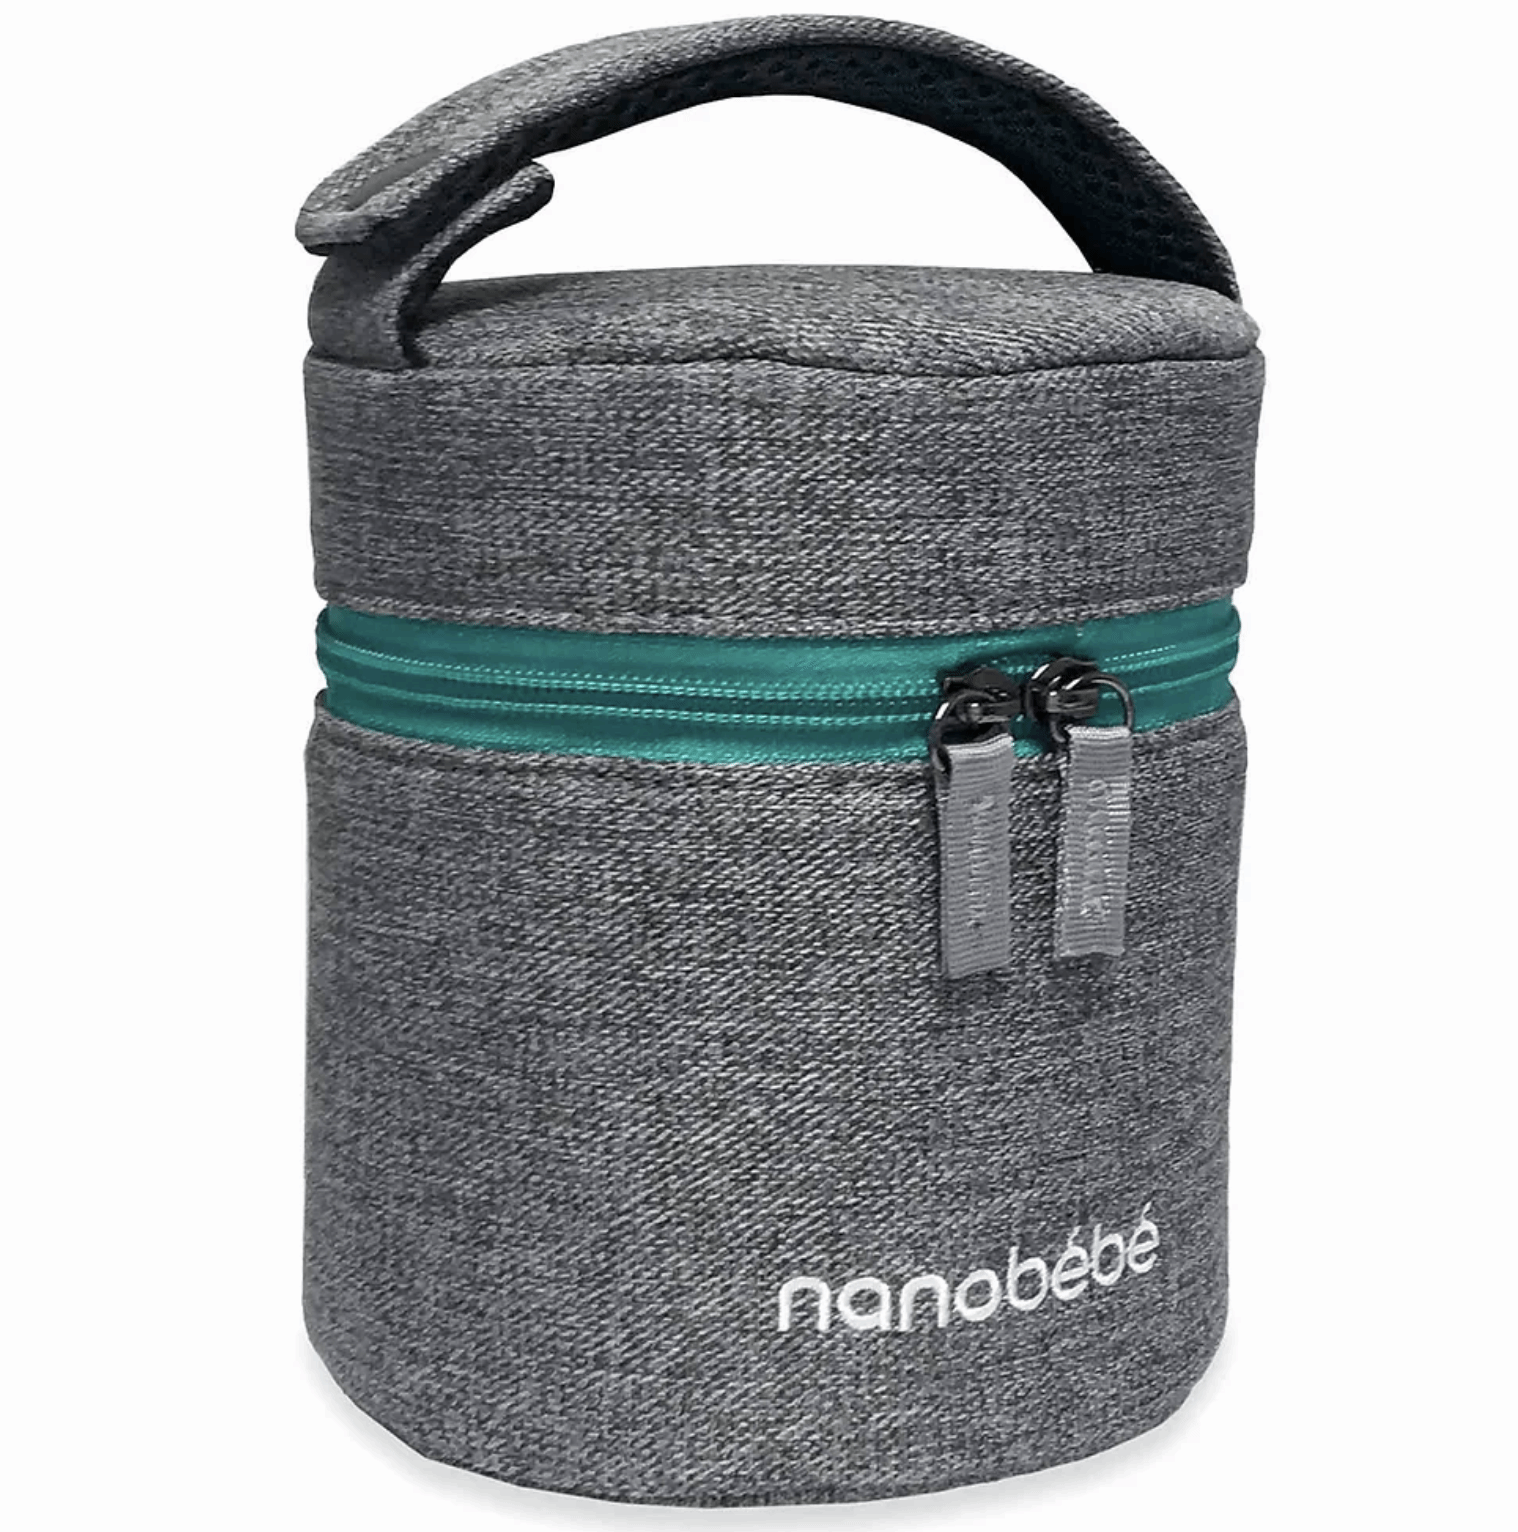 Nanobebe Cooler Bag & Travel Pack